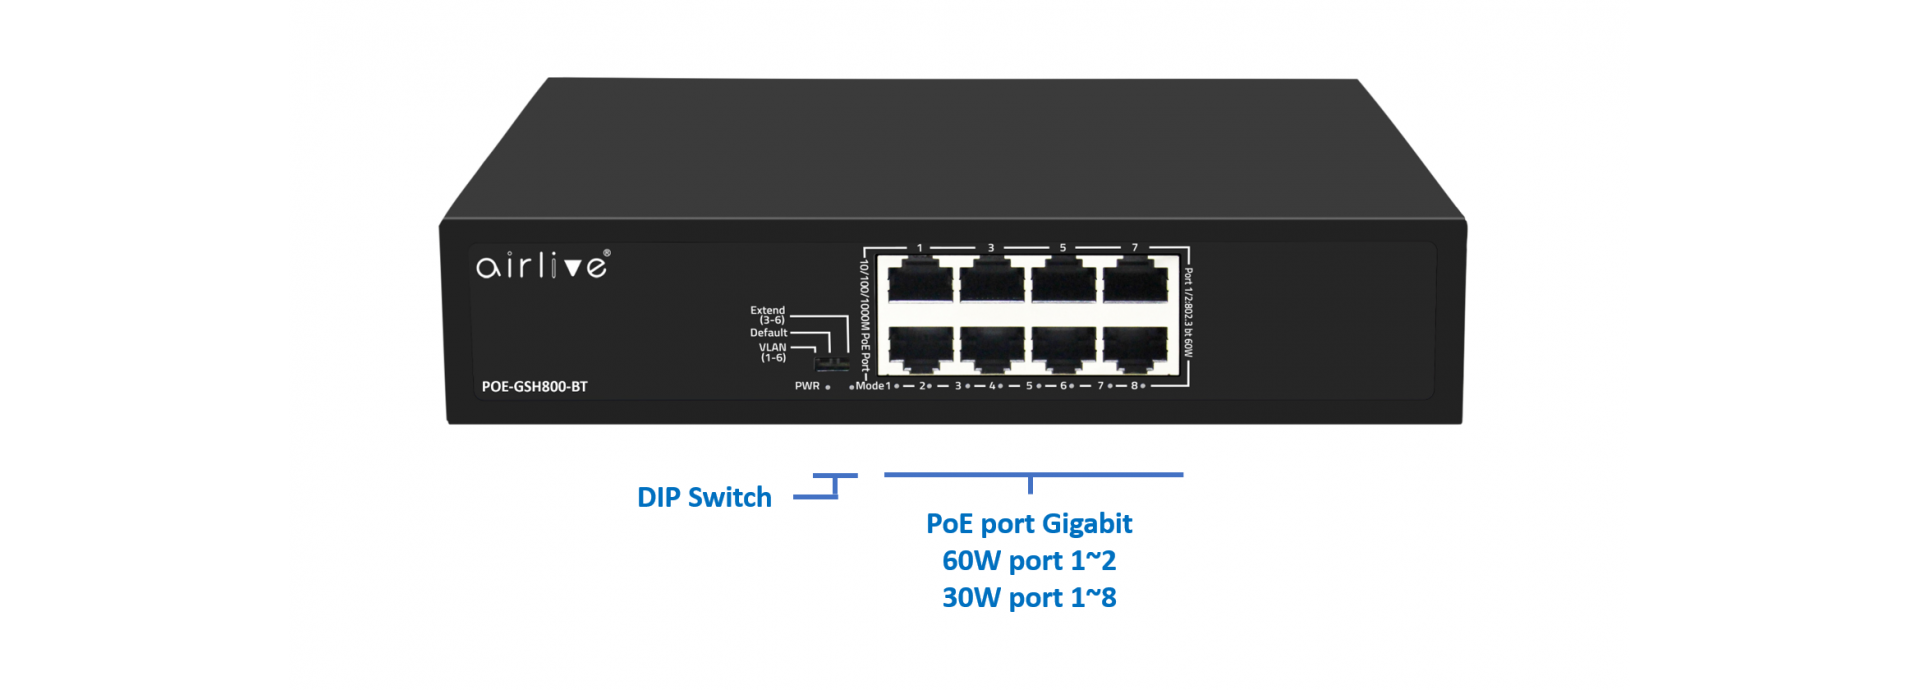 8-Port Gigabit PoE+ Switch with VLAN